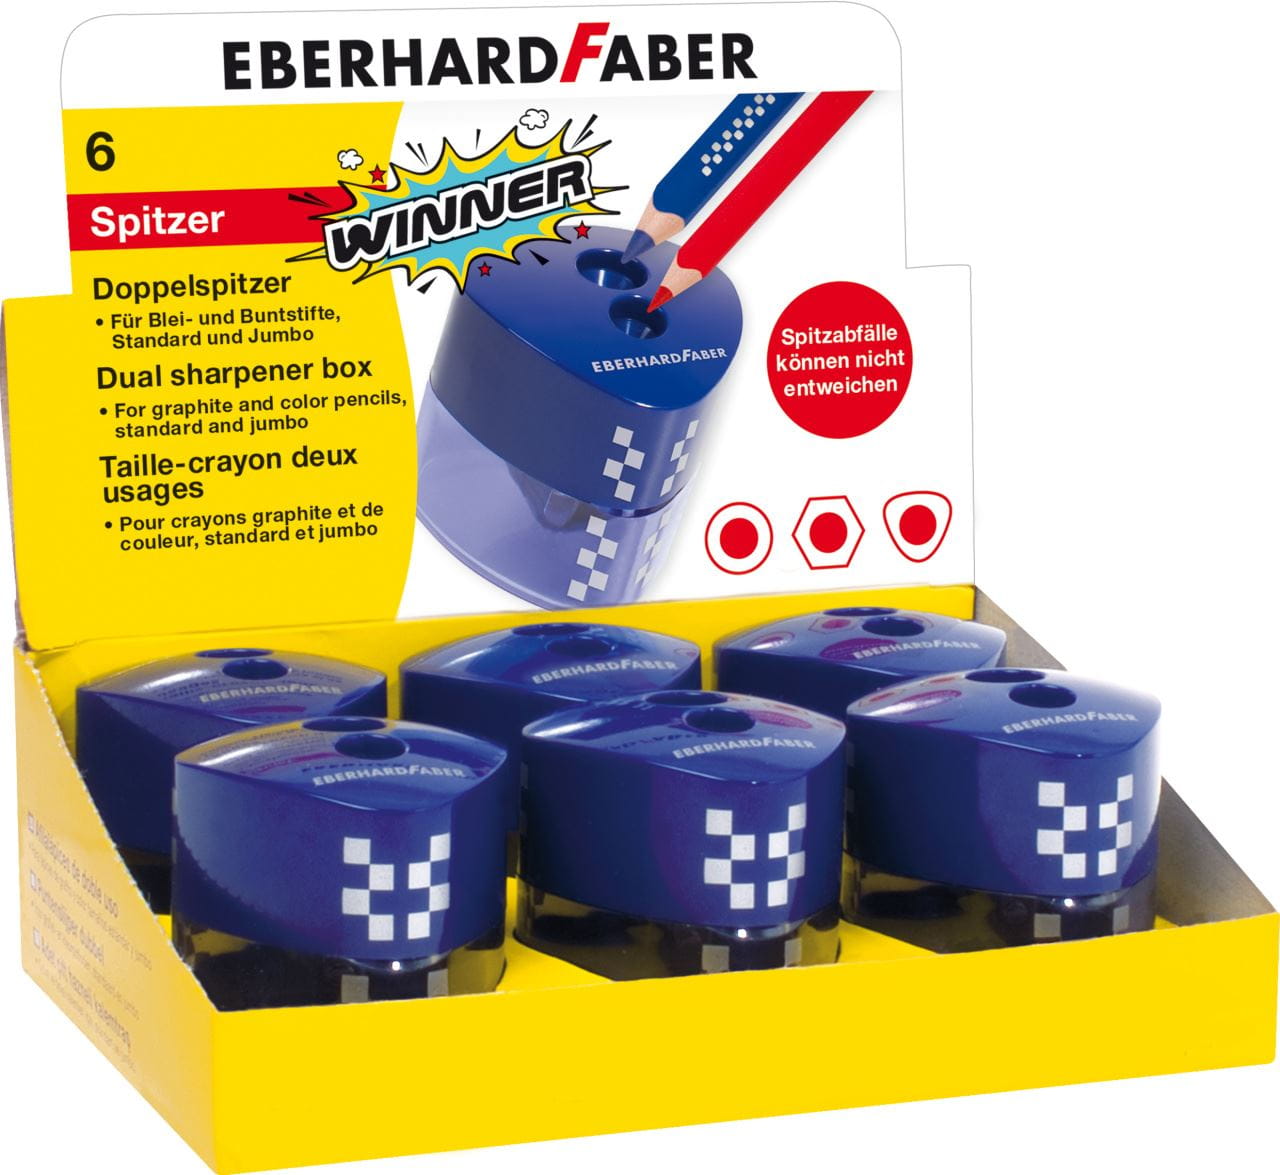 Eberhard-Faber - Winner Doppelspitzdose blau